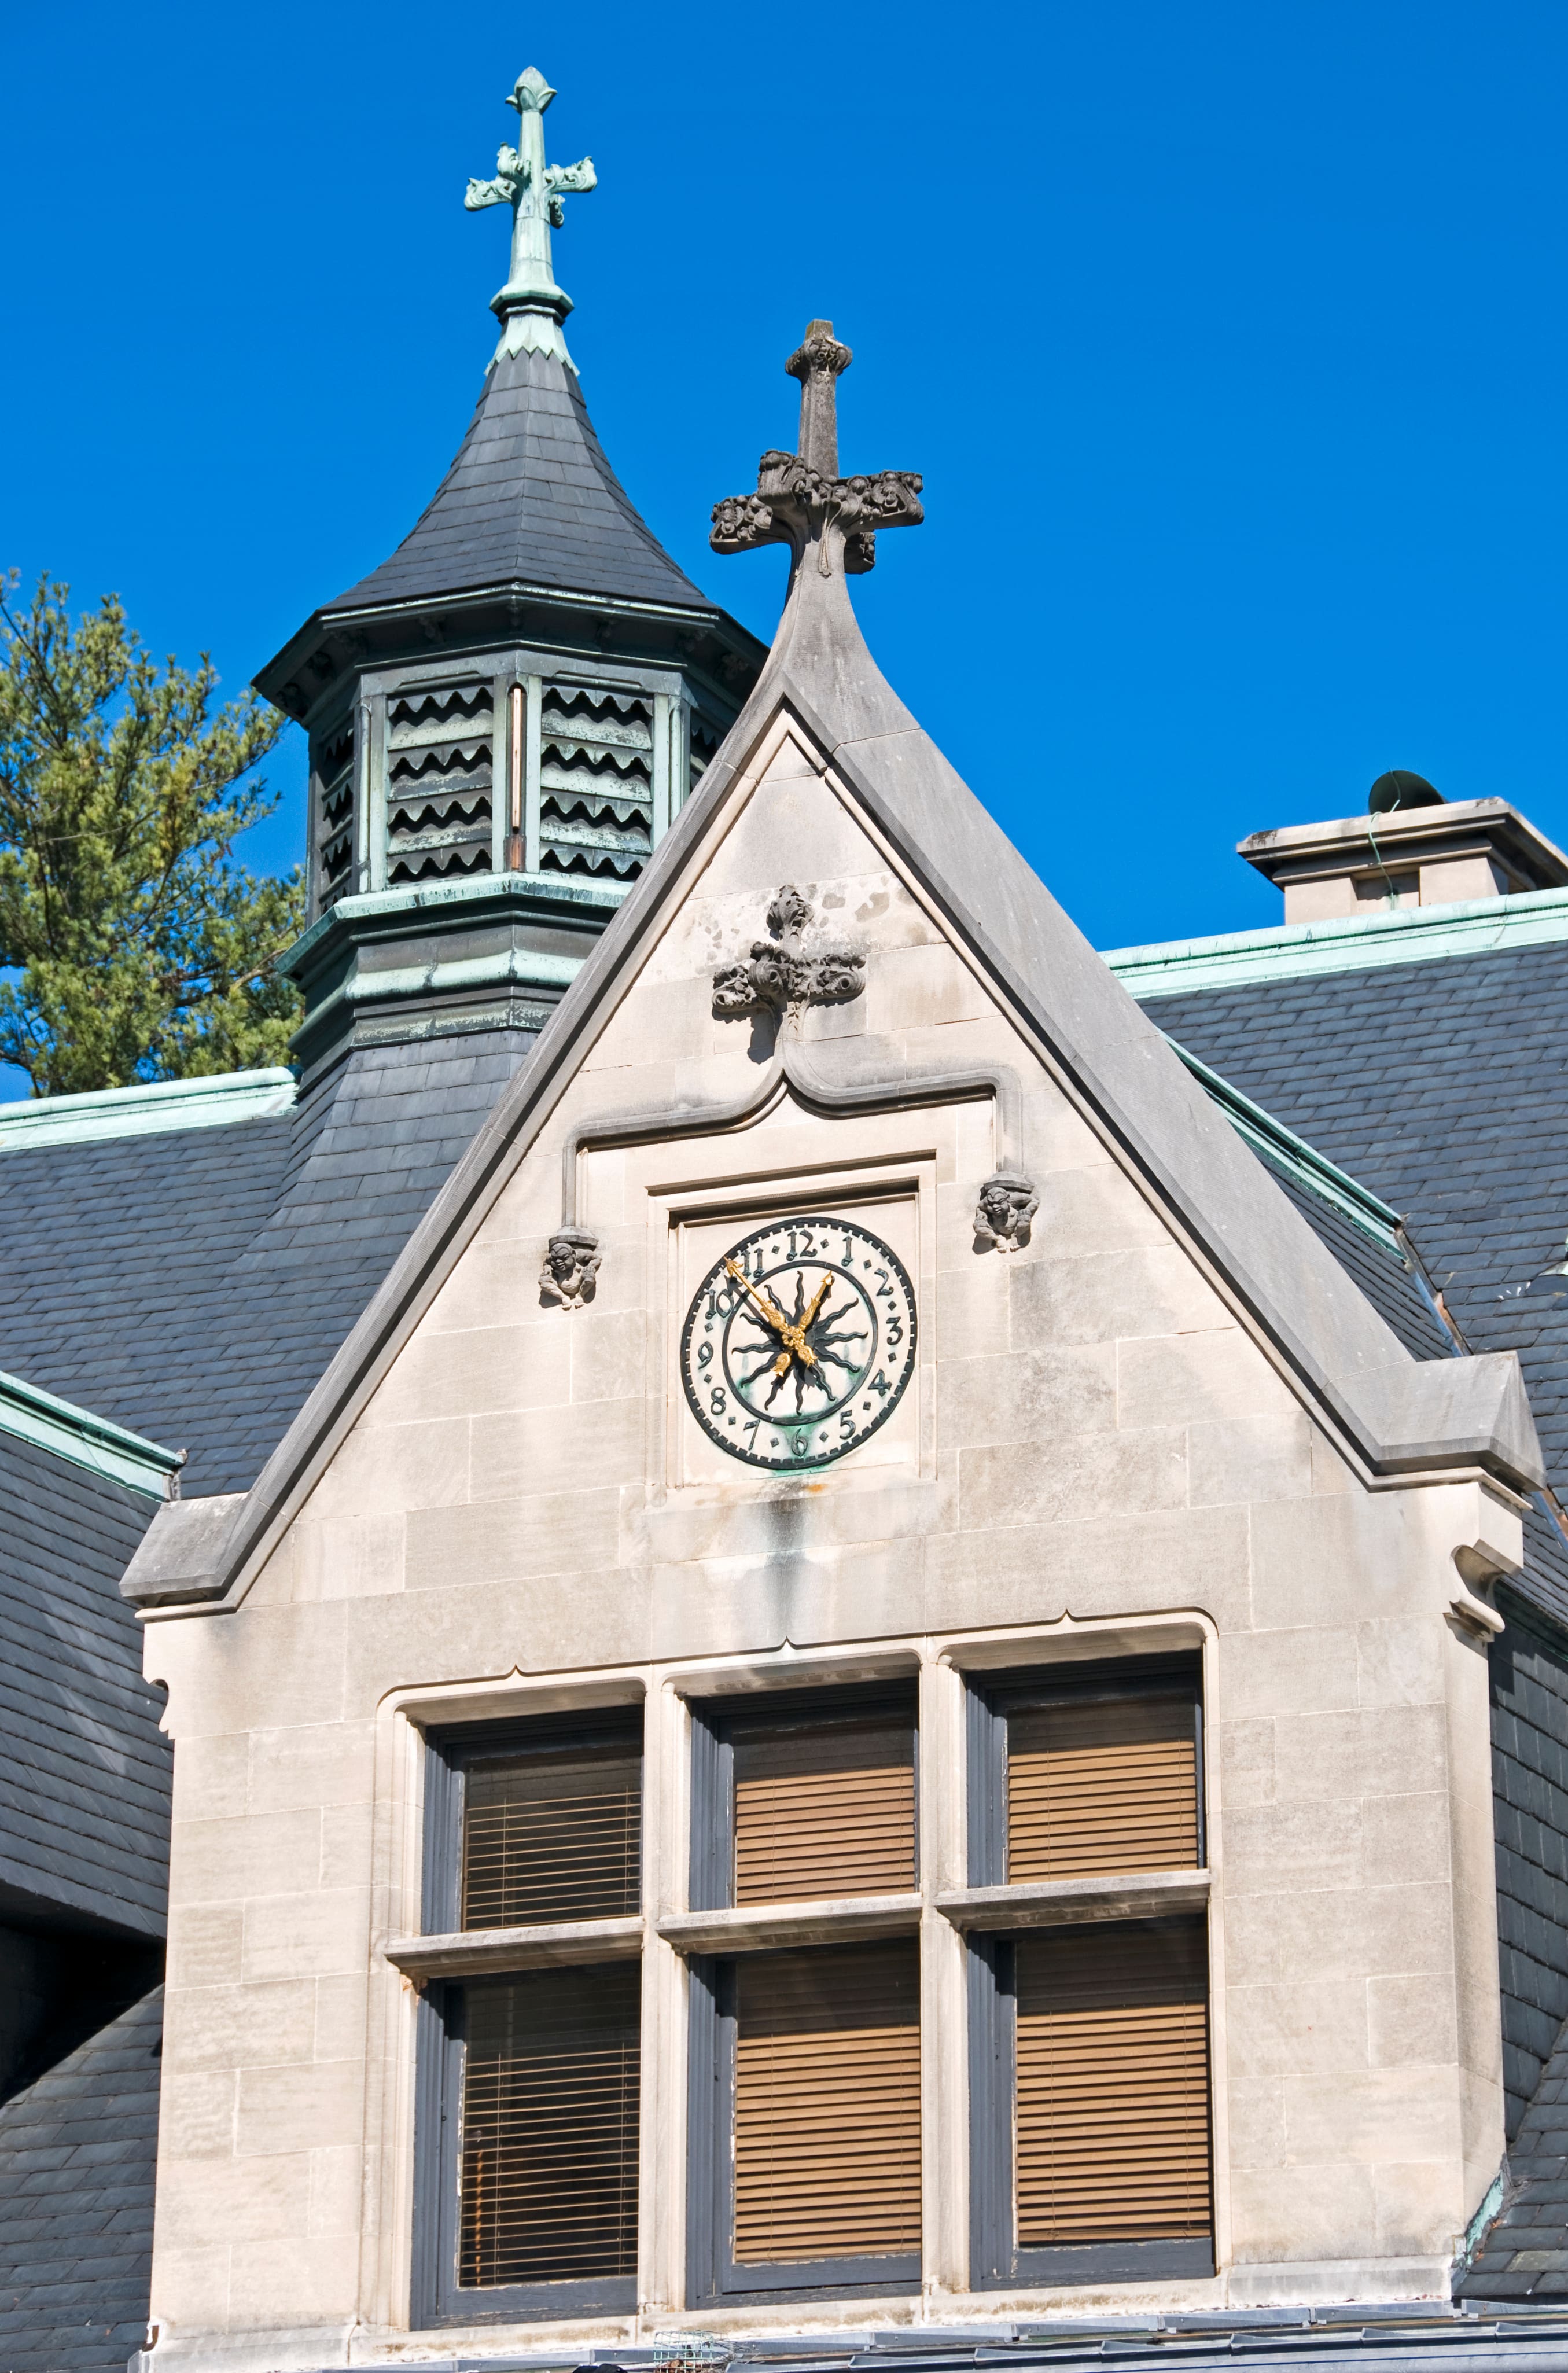 Clock on historic building in Asheville, North Carolina